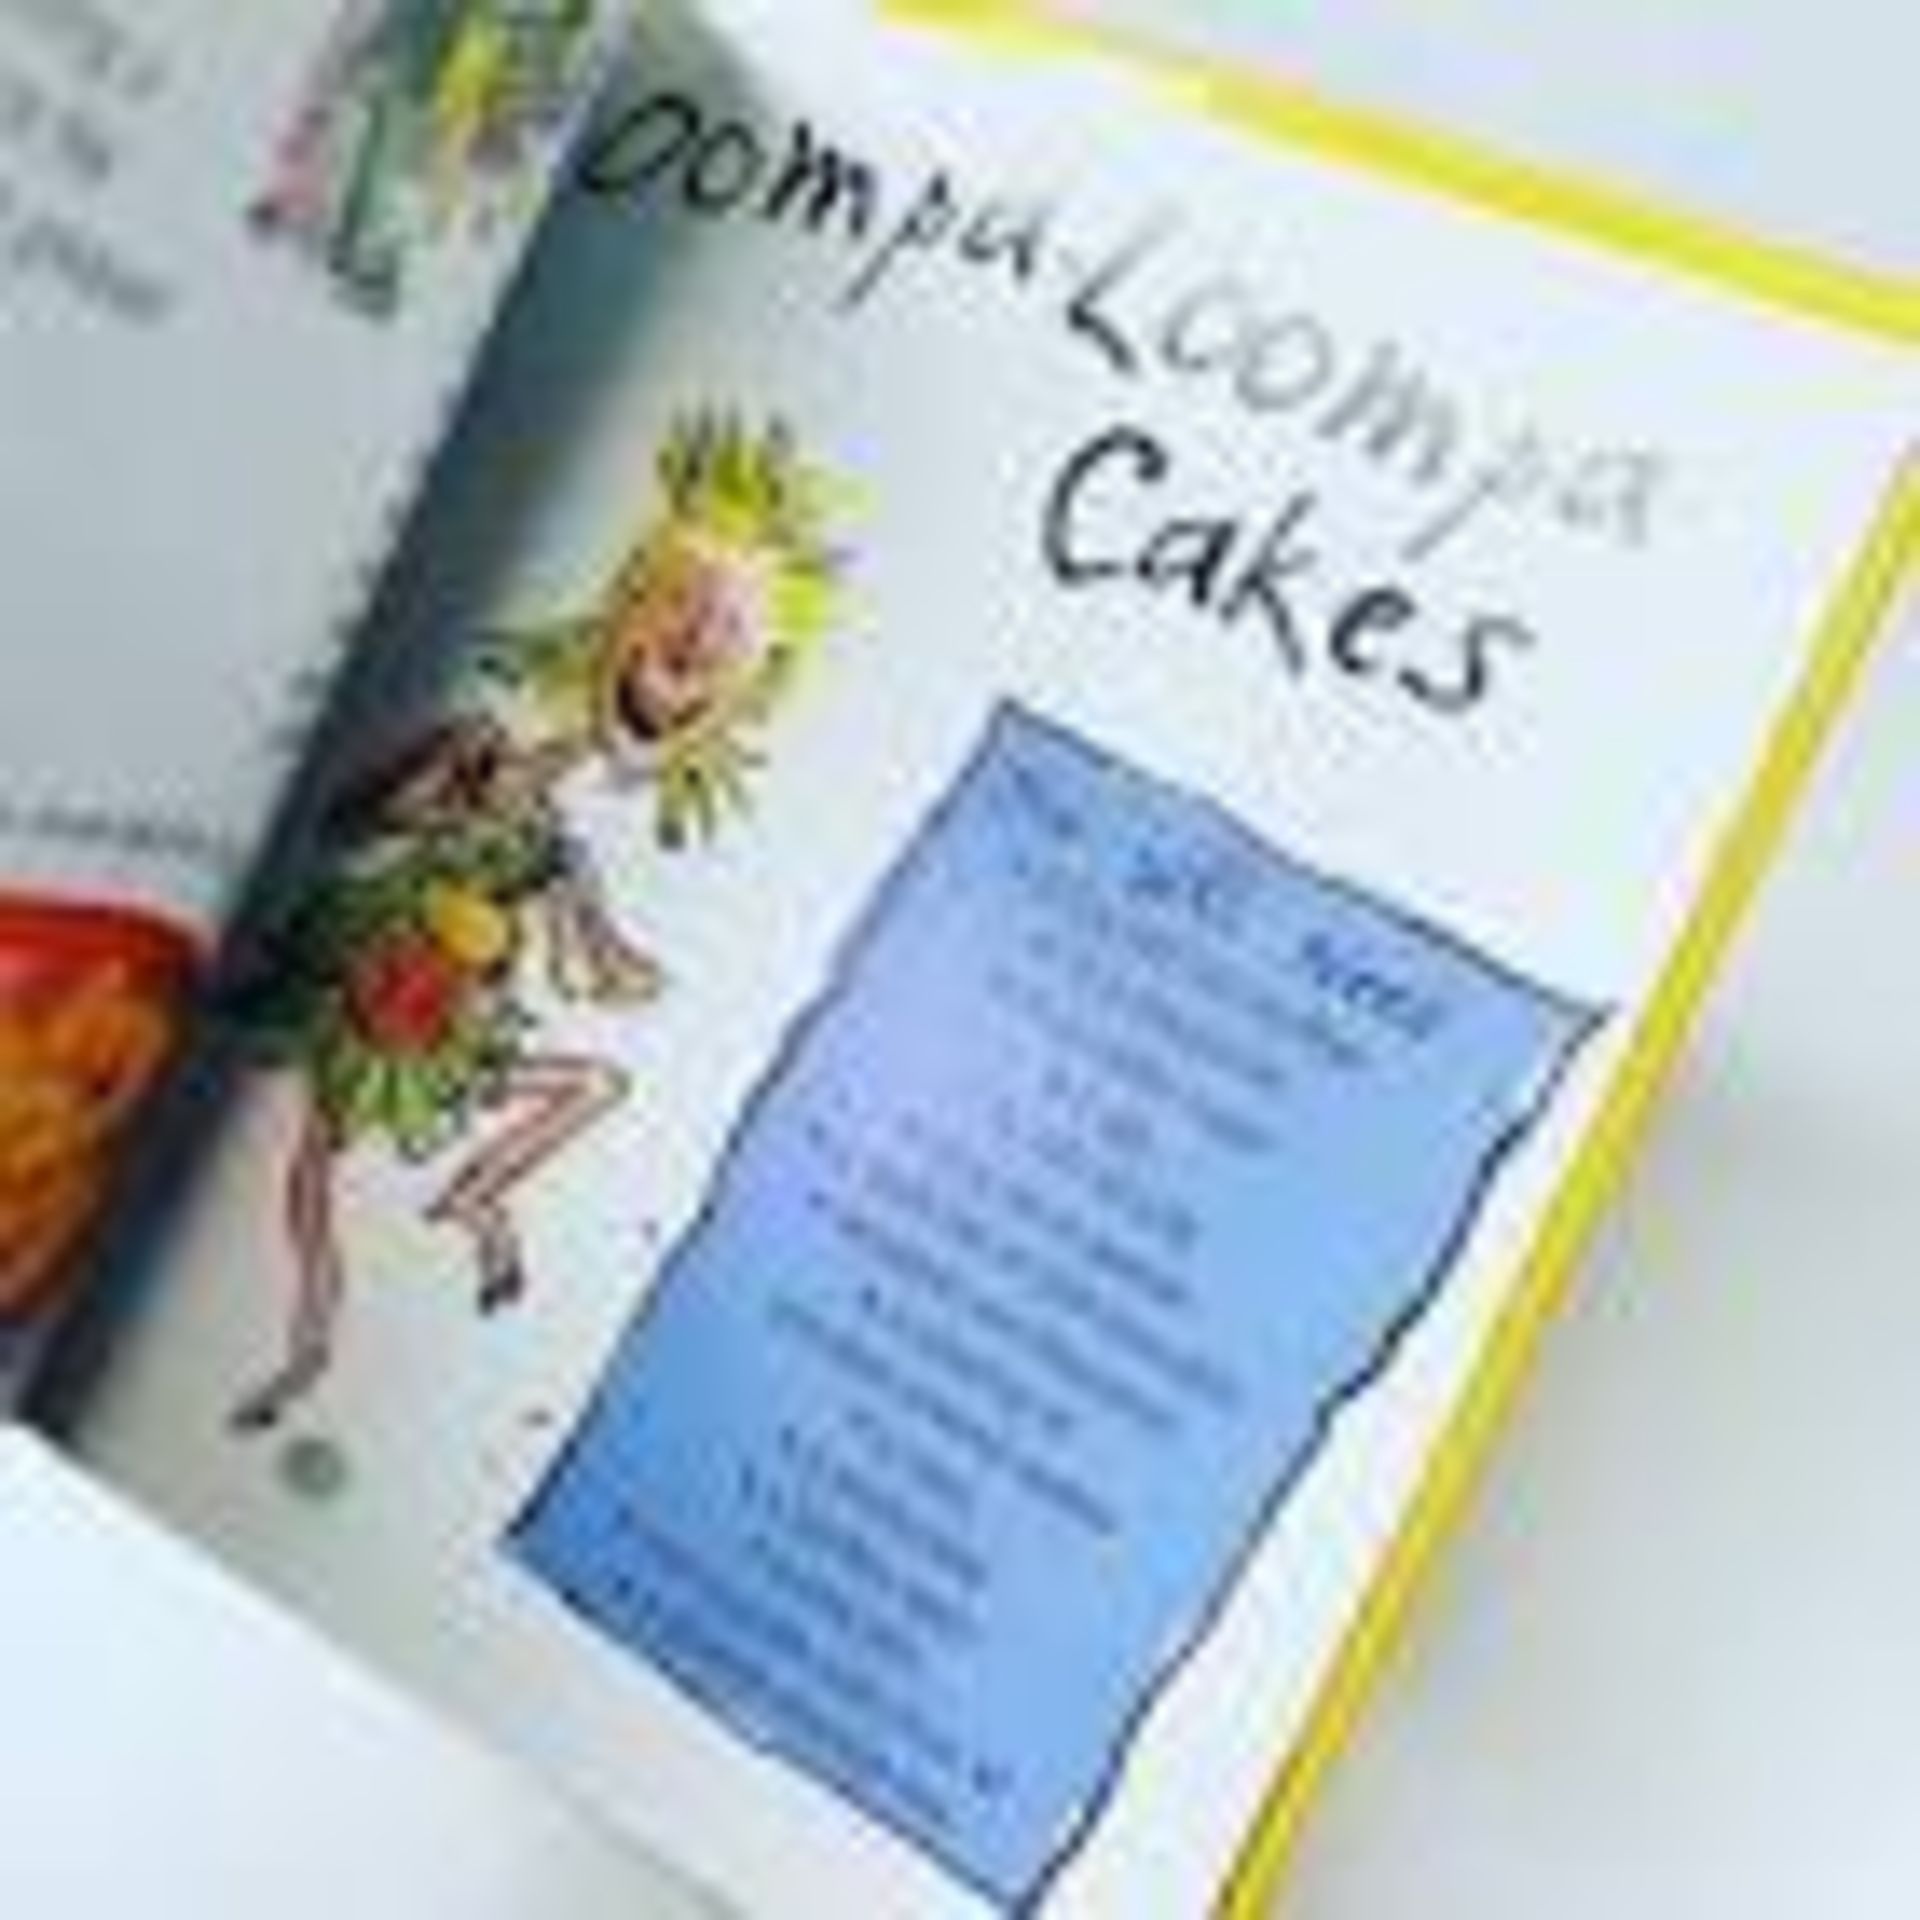 100 x Roald Dahl Grobswitchy Grumb Cupcake Making Kit - Image 4 of 4